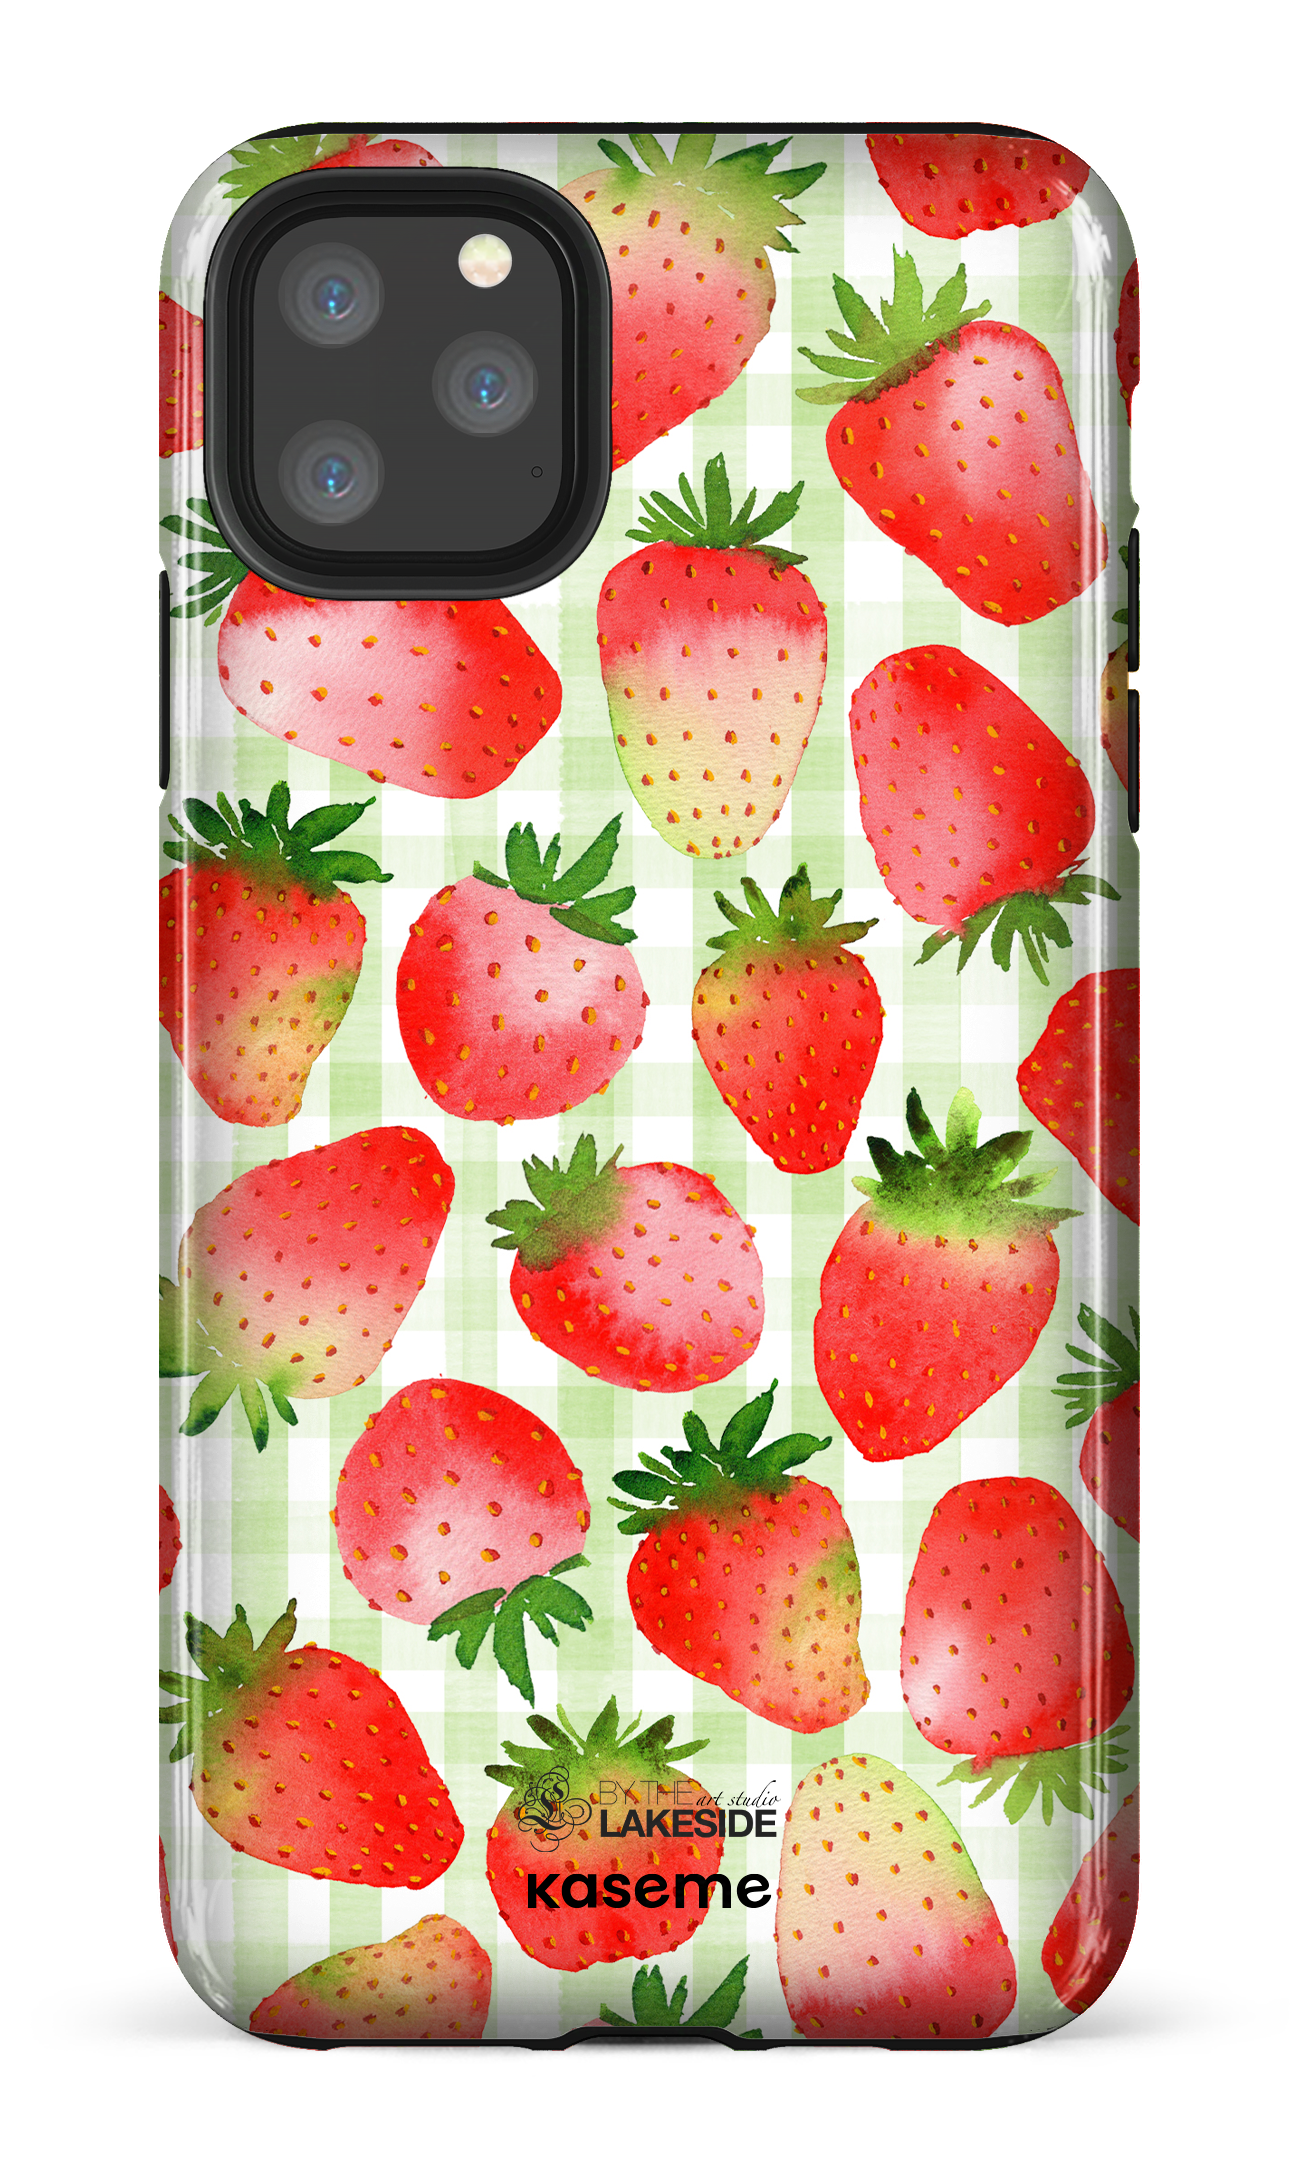 Strawberry Fields Green by Pooja Umrani - iPhone 11 Pro Max